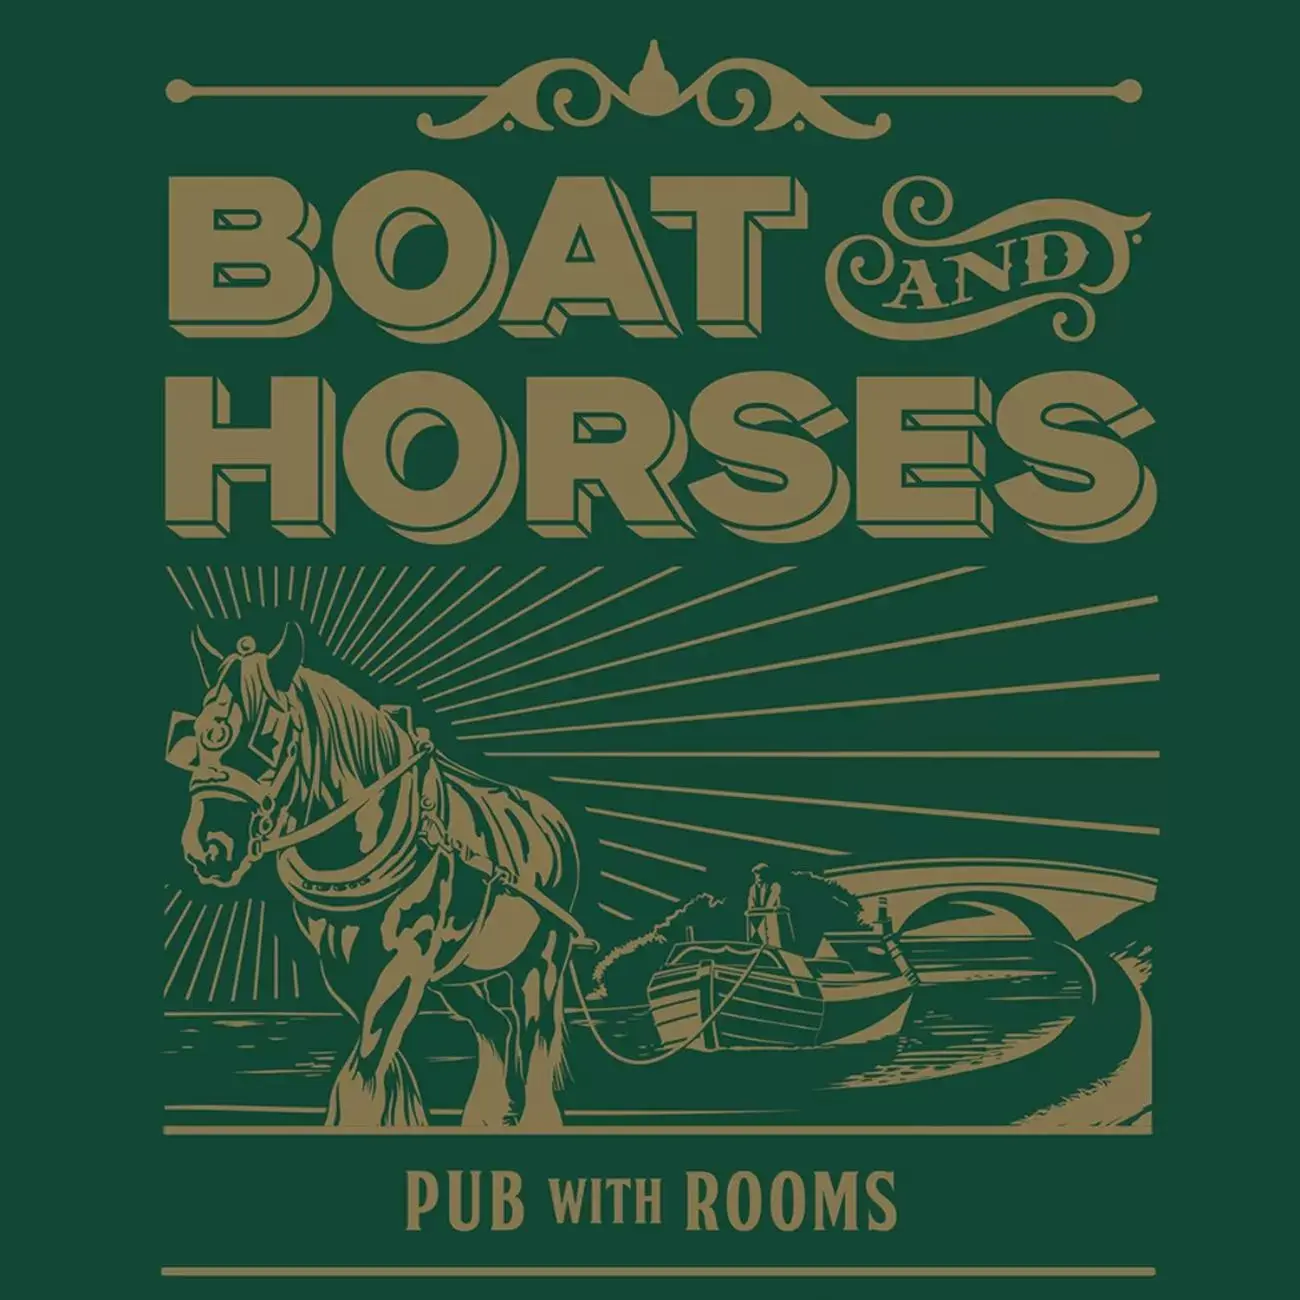 Property logo or sign in Boat & Horses Inn